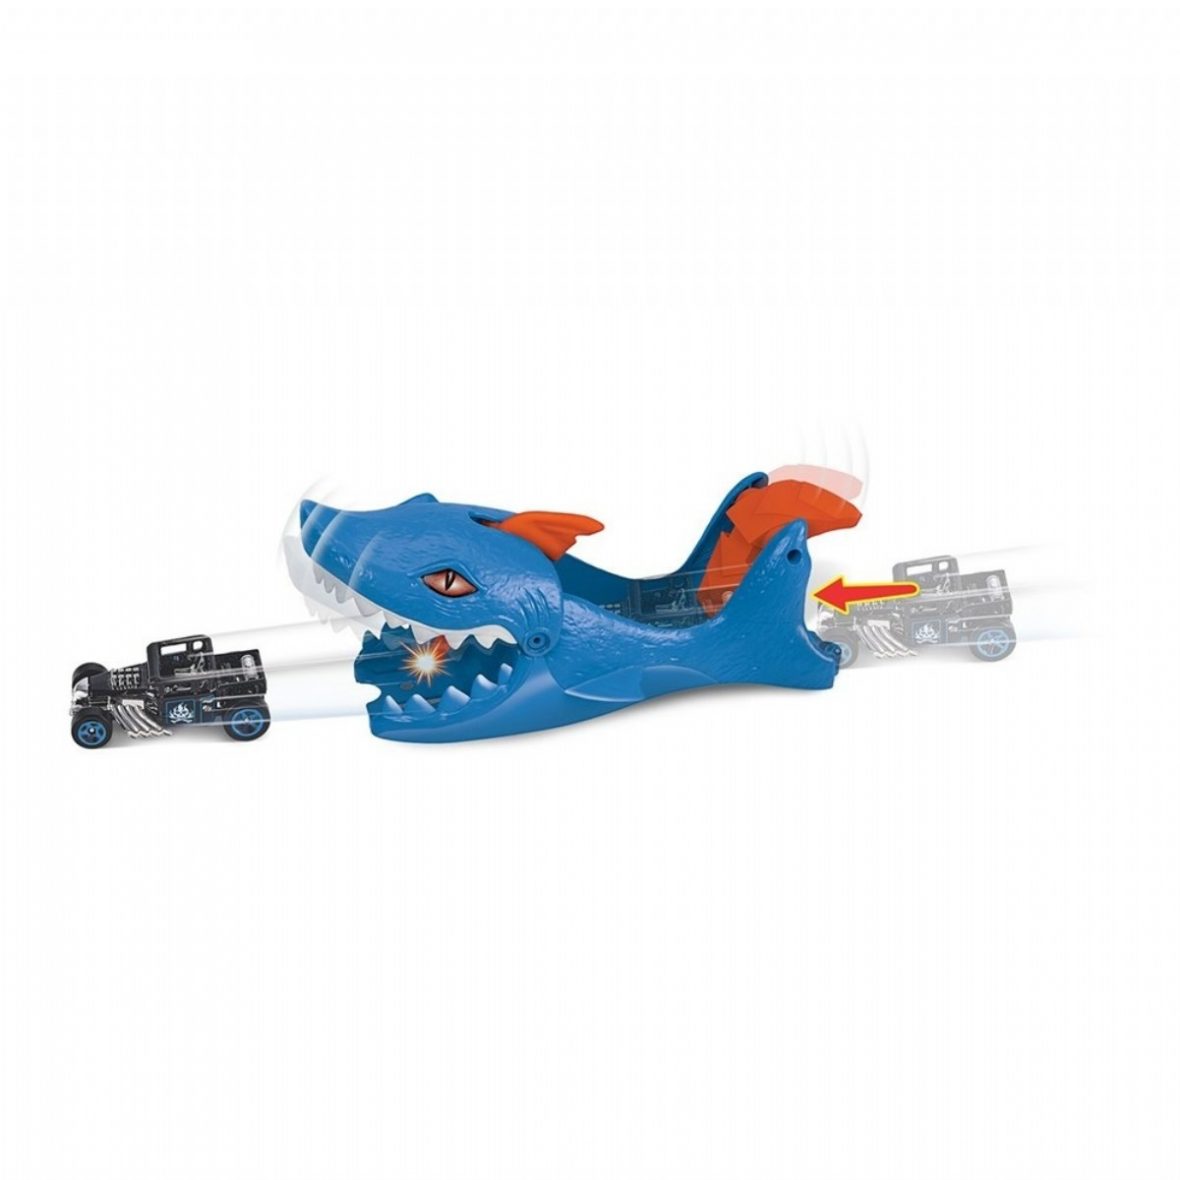 Hot-Wheels-Shark-Launcher-Toy-For-Kids-1